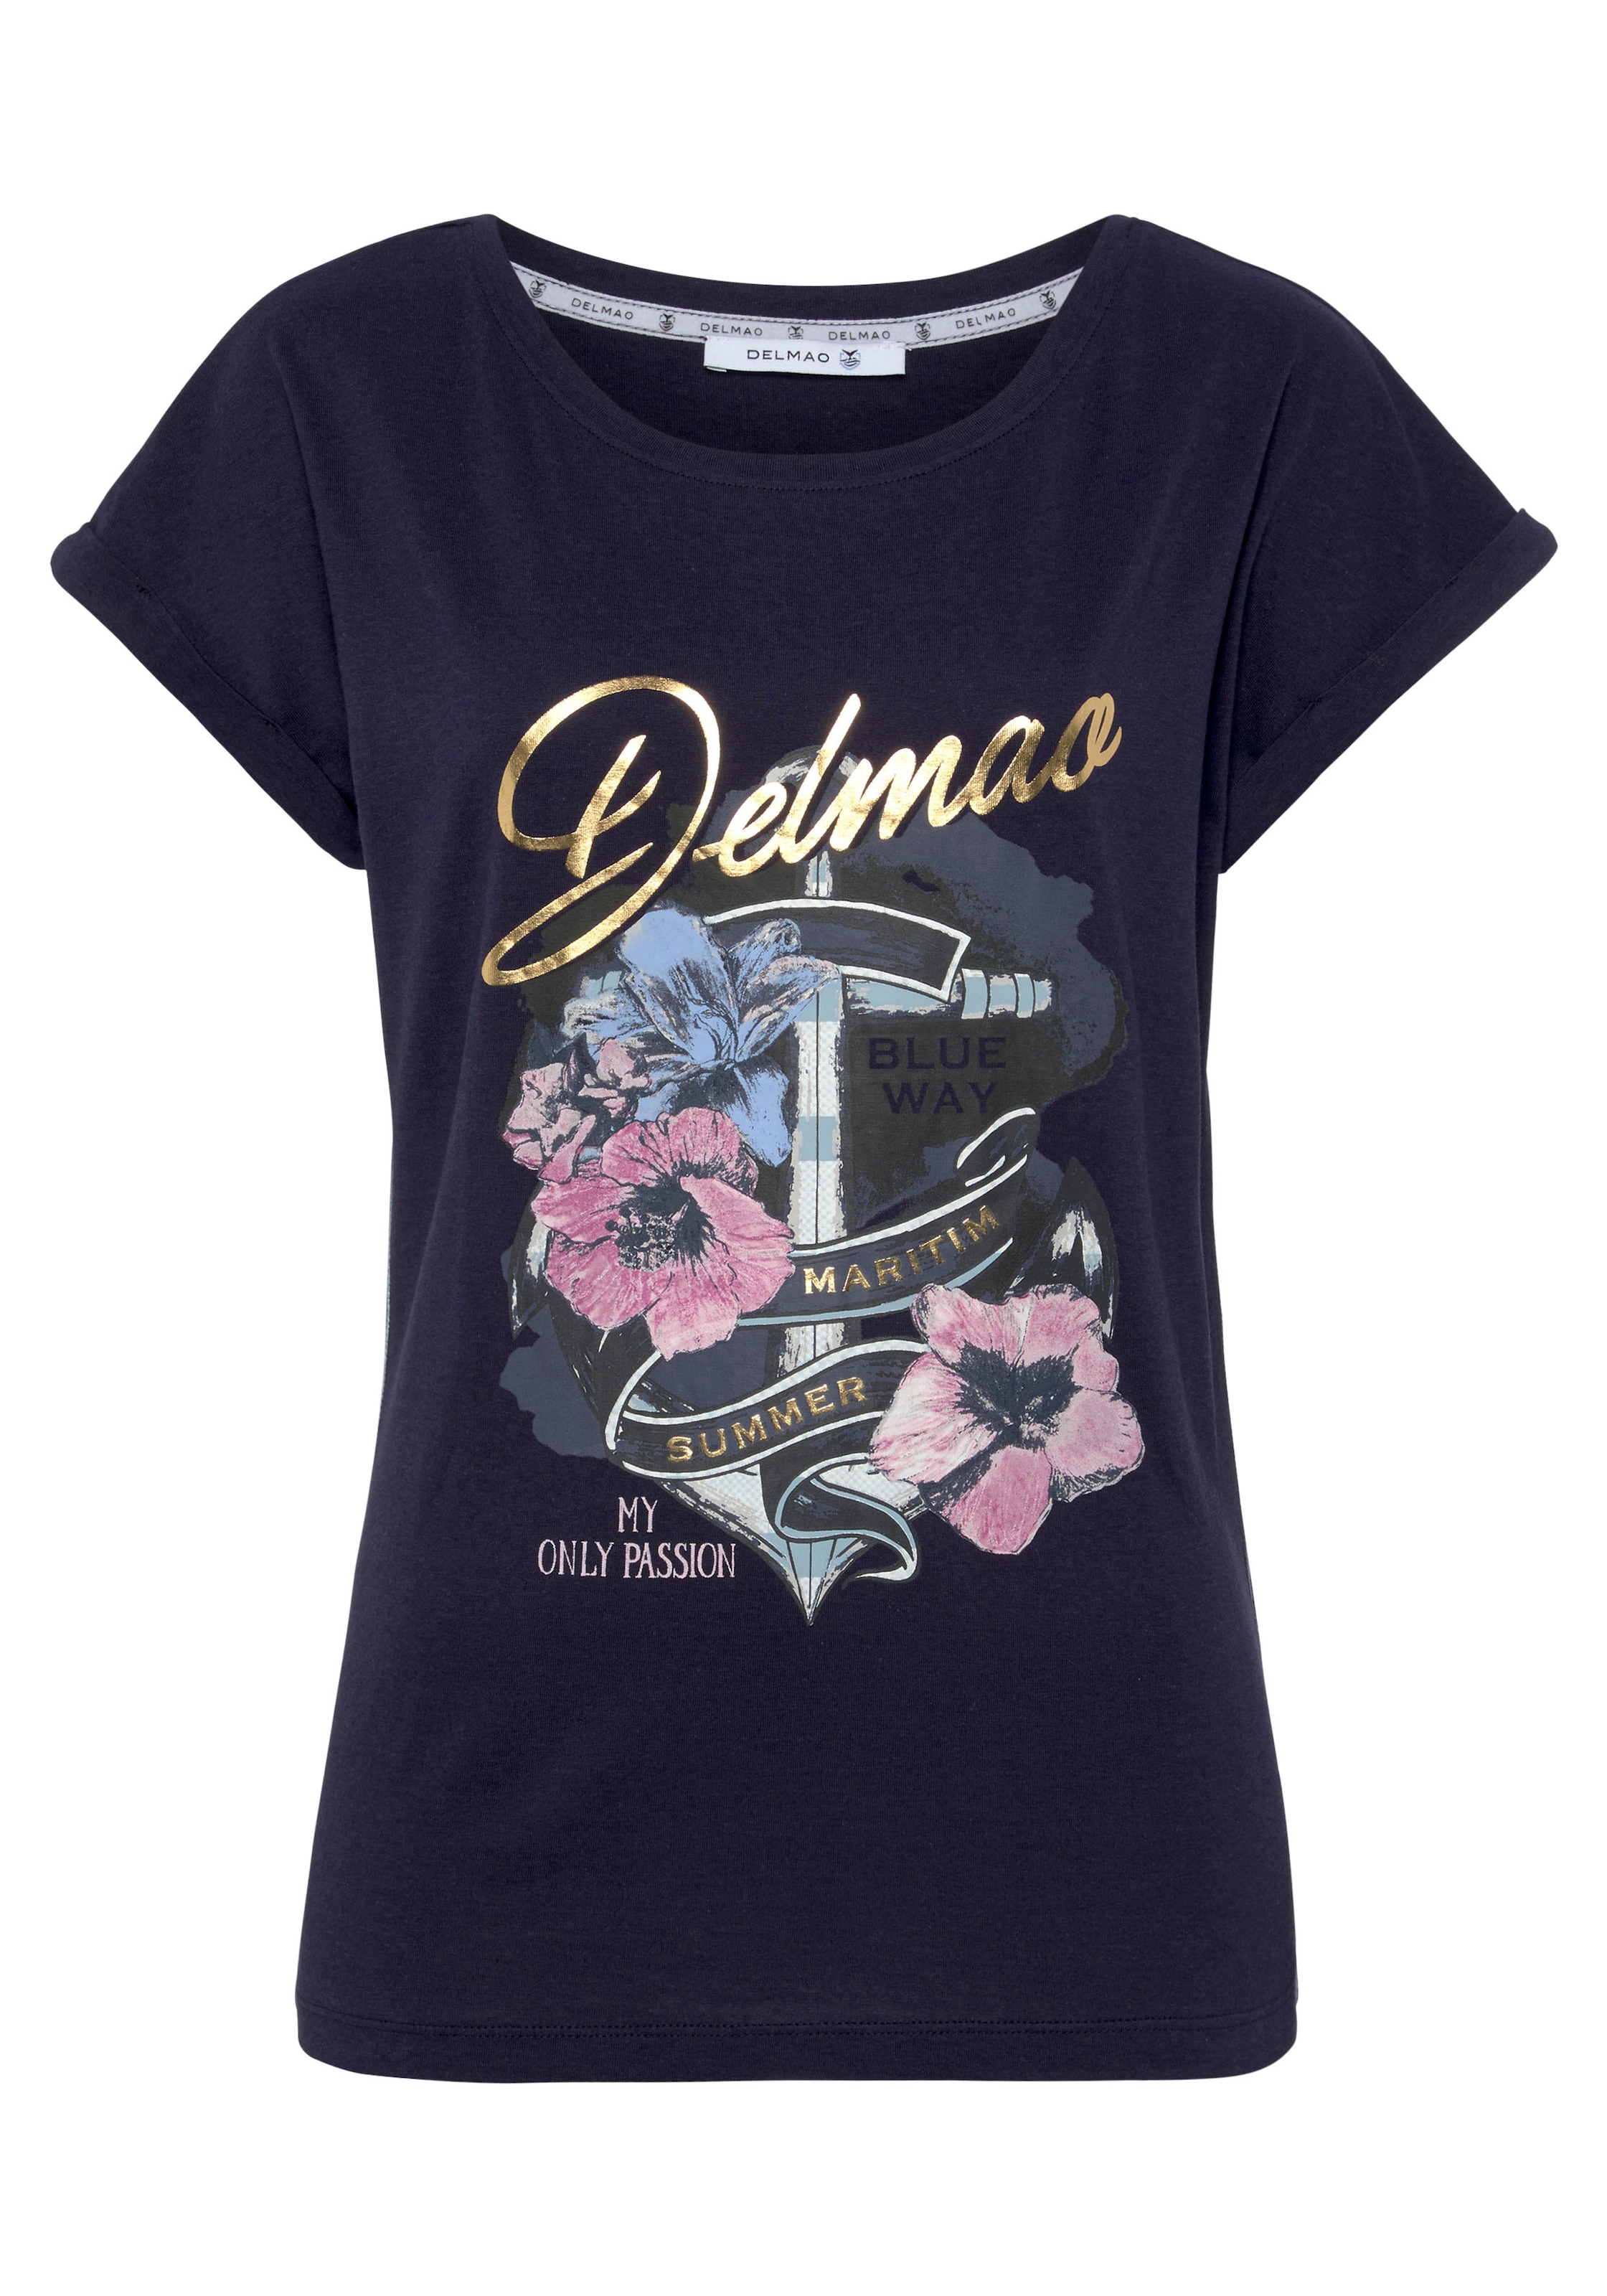 DELMAO Print-Shirt, mit - geblümten NEUE MARKE! shoppen Anker-Logodruck